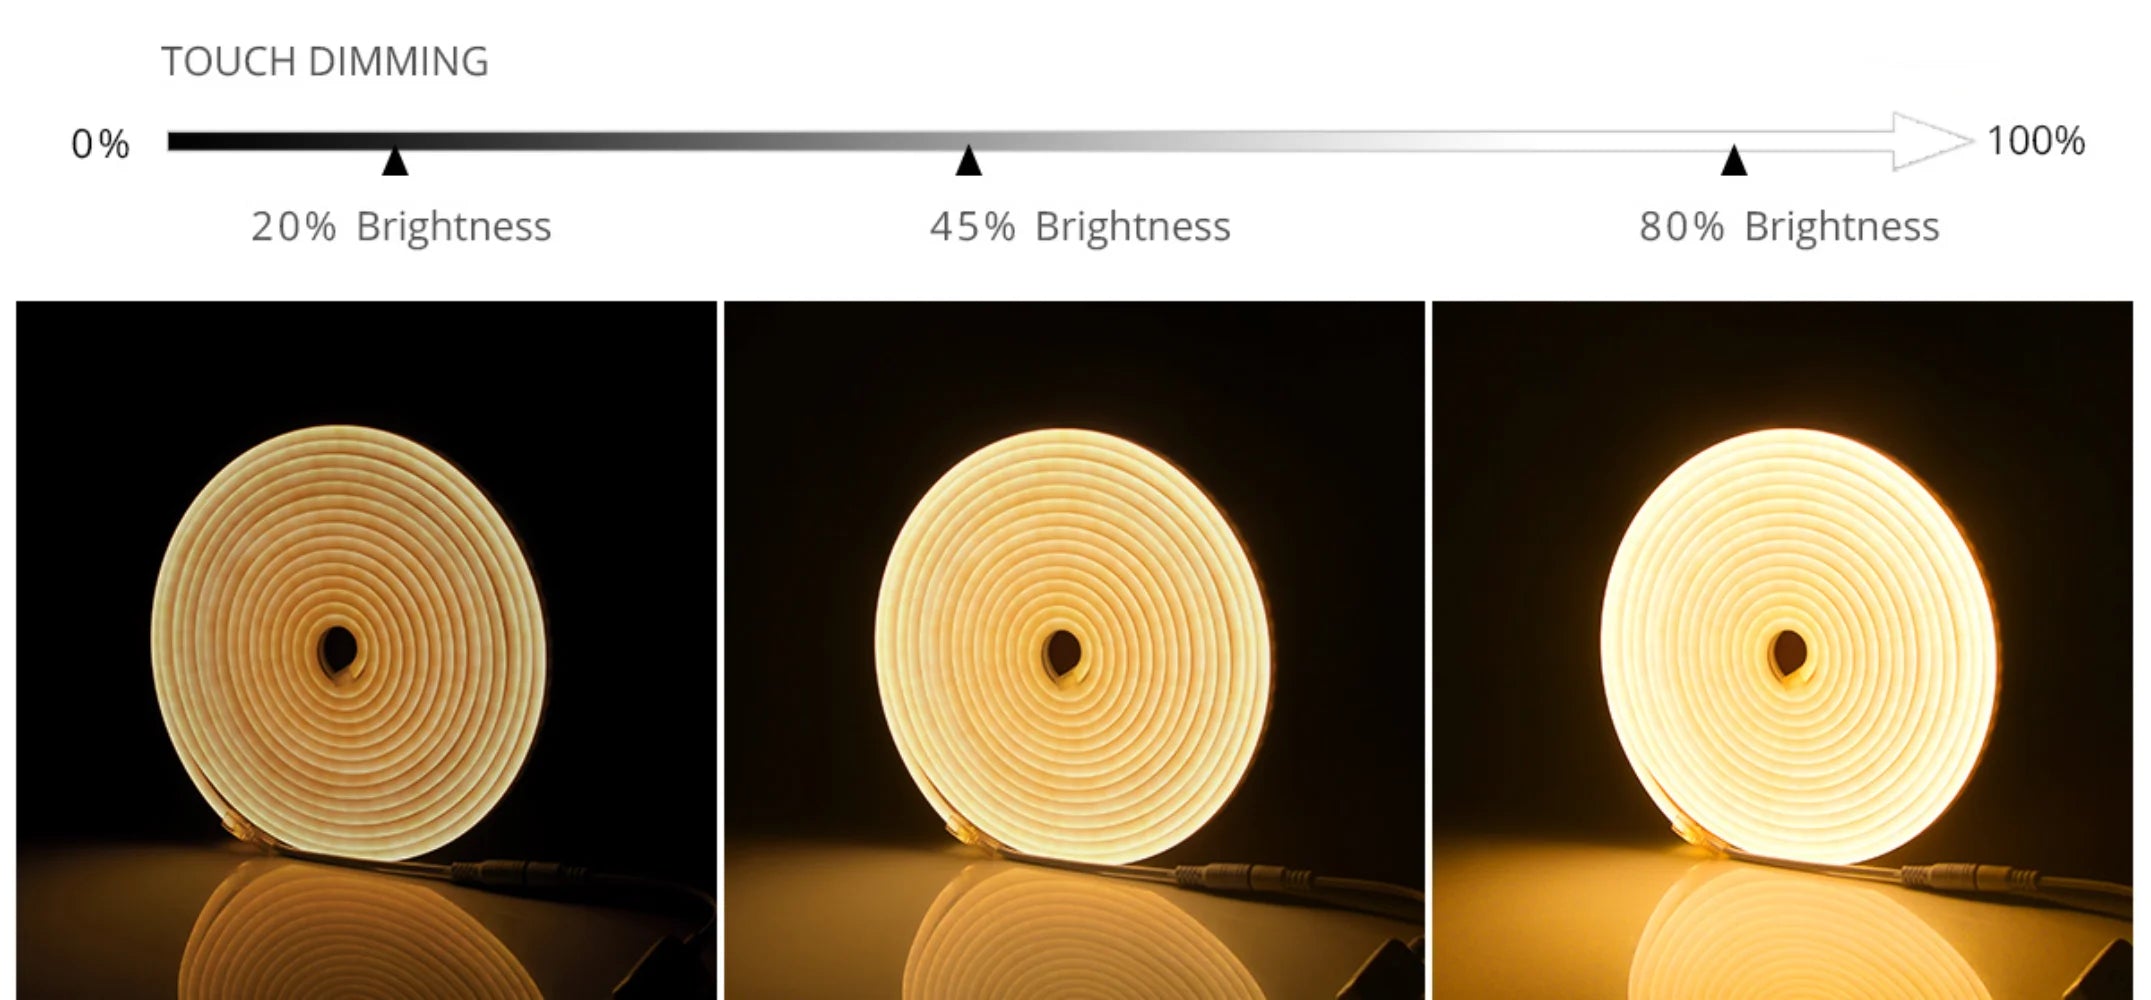 Flexible Tira Led Neon Flex Led Strip Light, Adjustable brightness control allows customizable lighting levels from 0-100%.